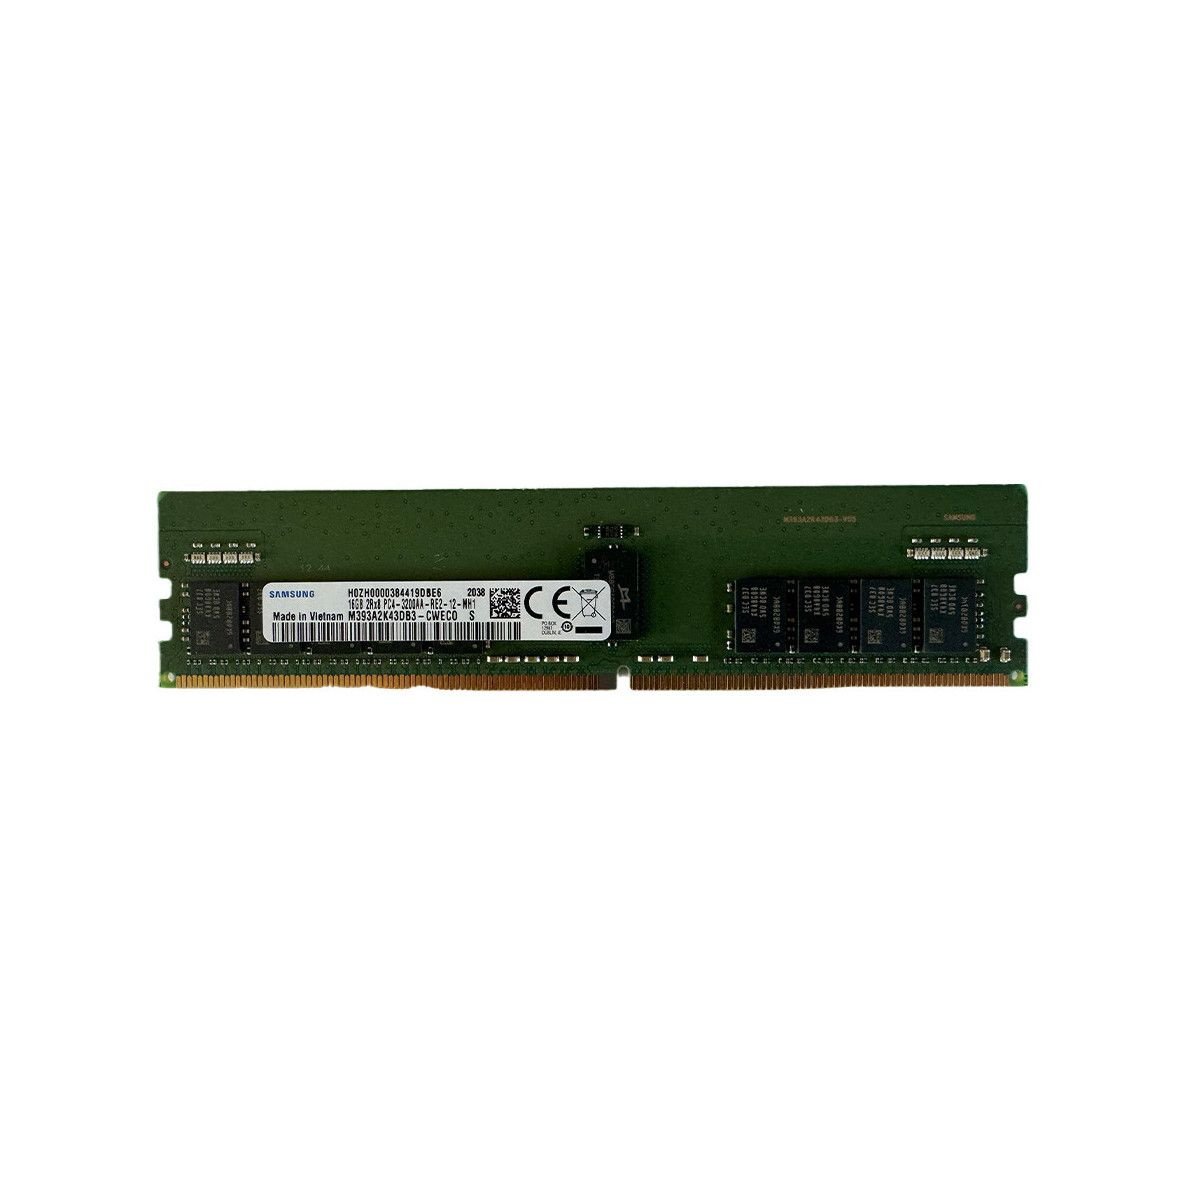 AA810826-MS - Memstar 1x 16GB DDR4-3200 RDIMM PC4-25600R - Mem-Star OEM compatibile Memoria 1 - Memstar 